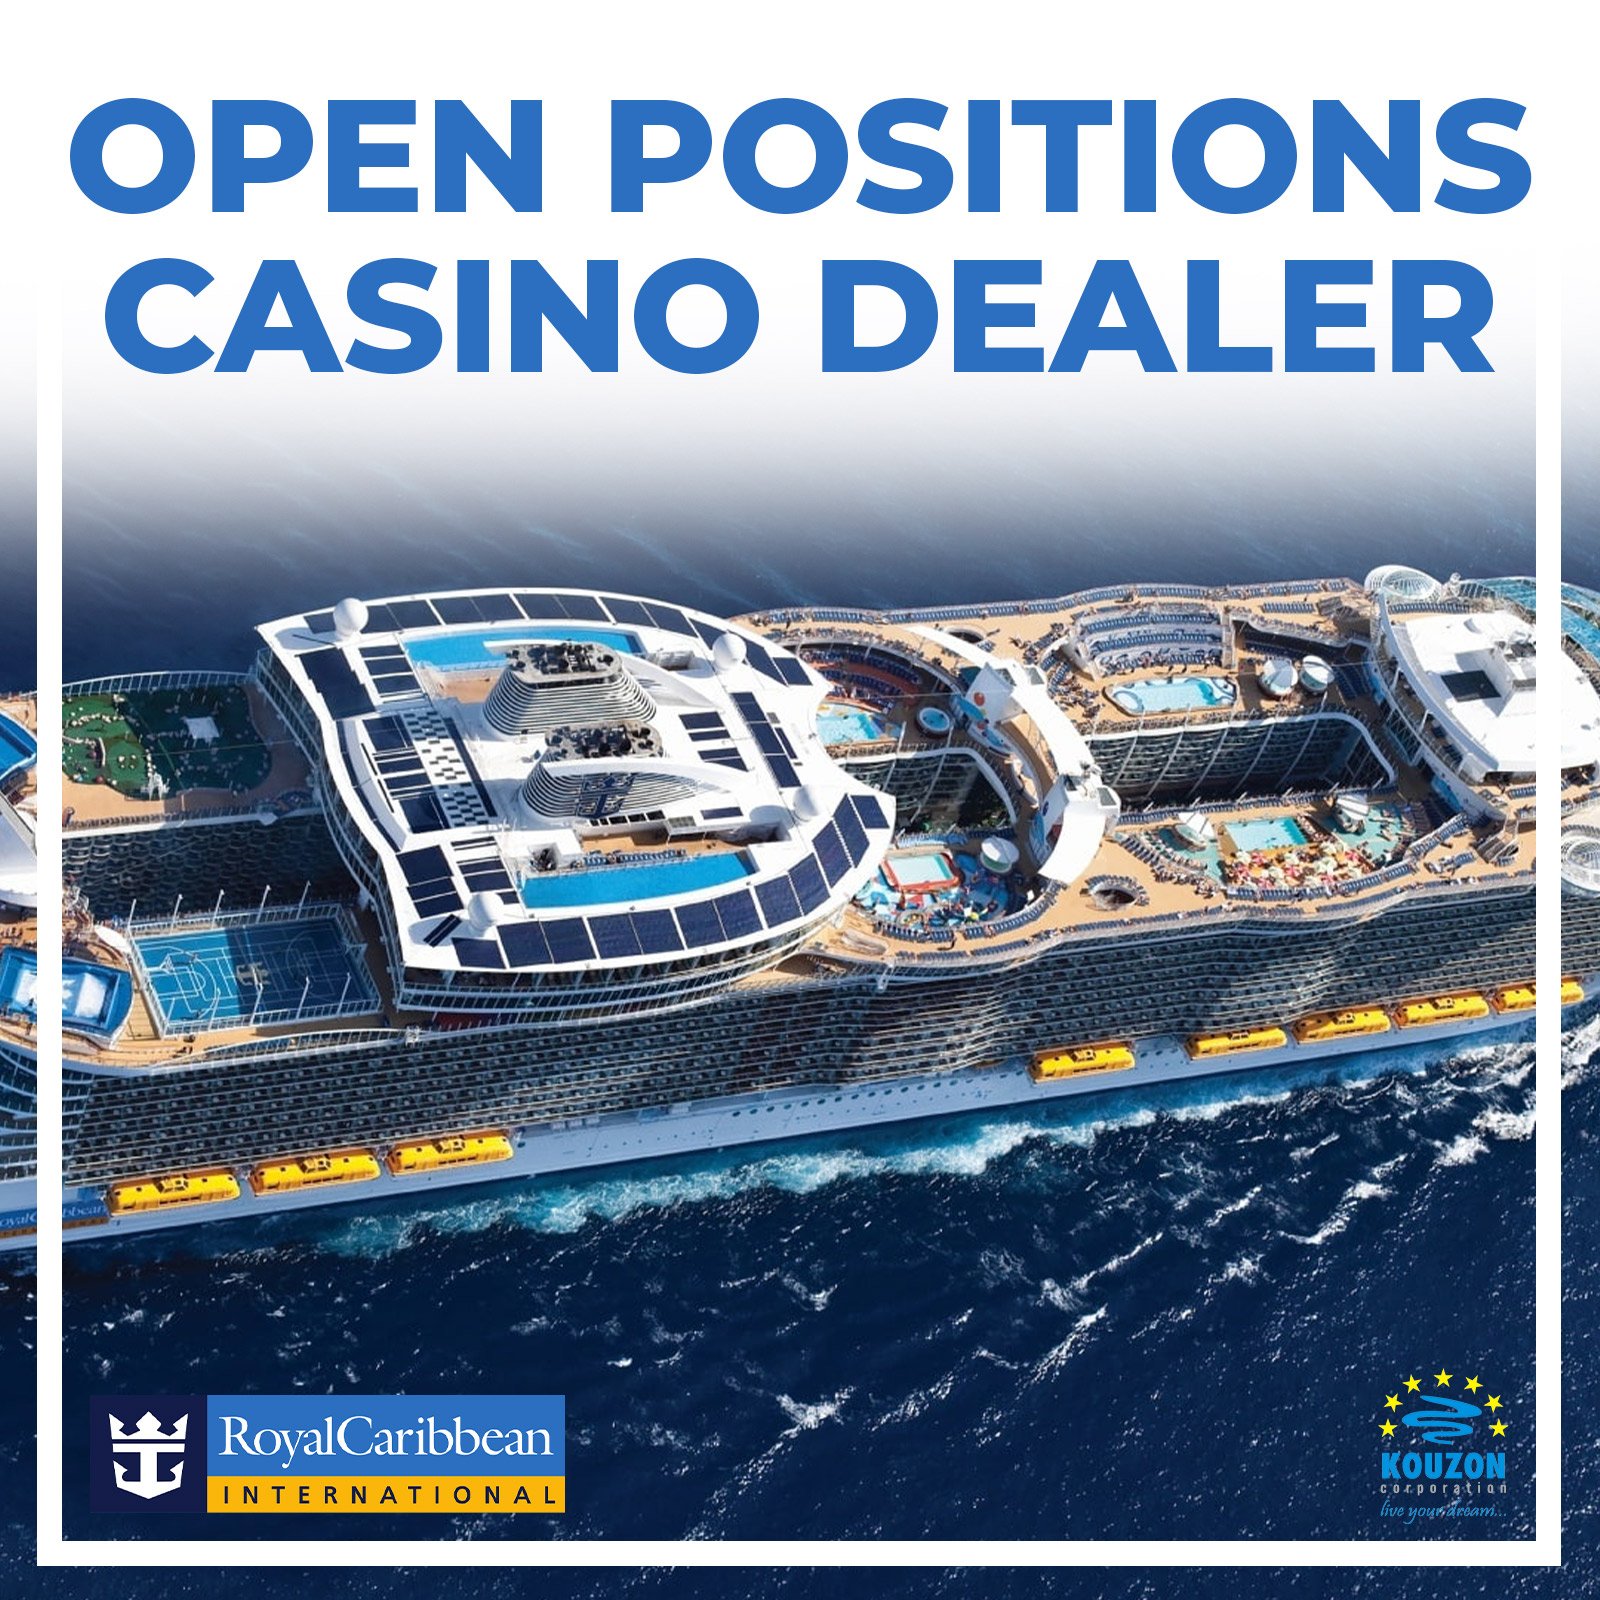 star cruise casino dealer hiring